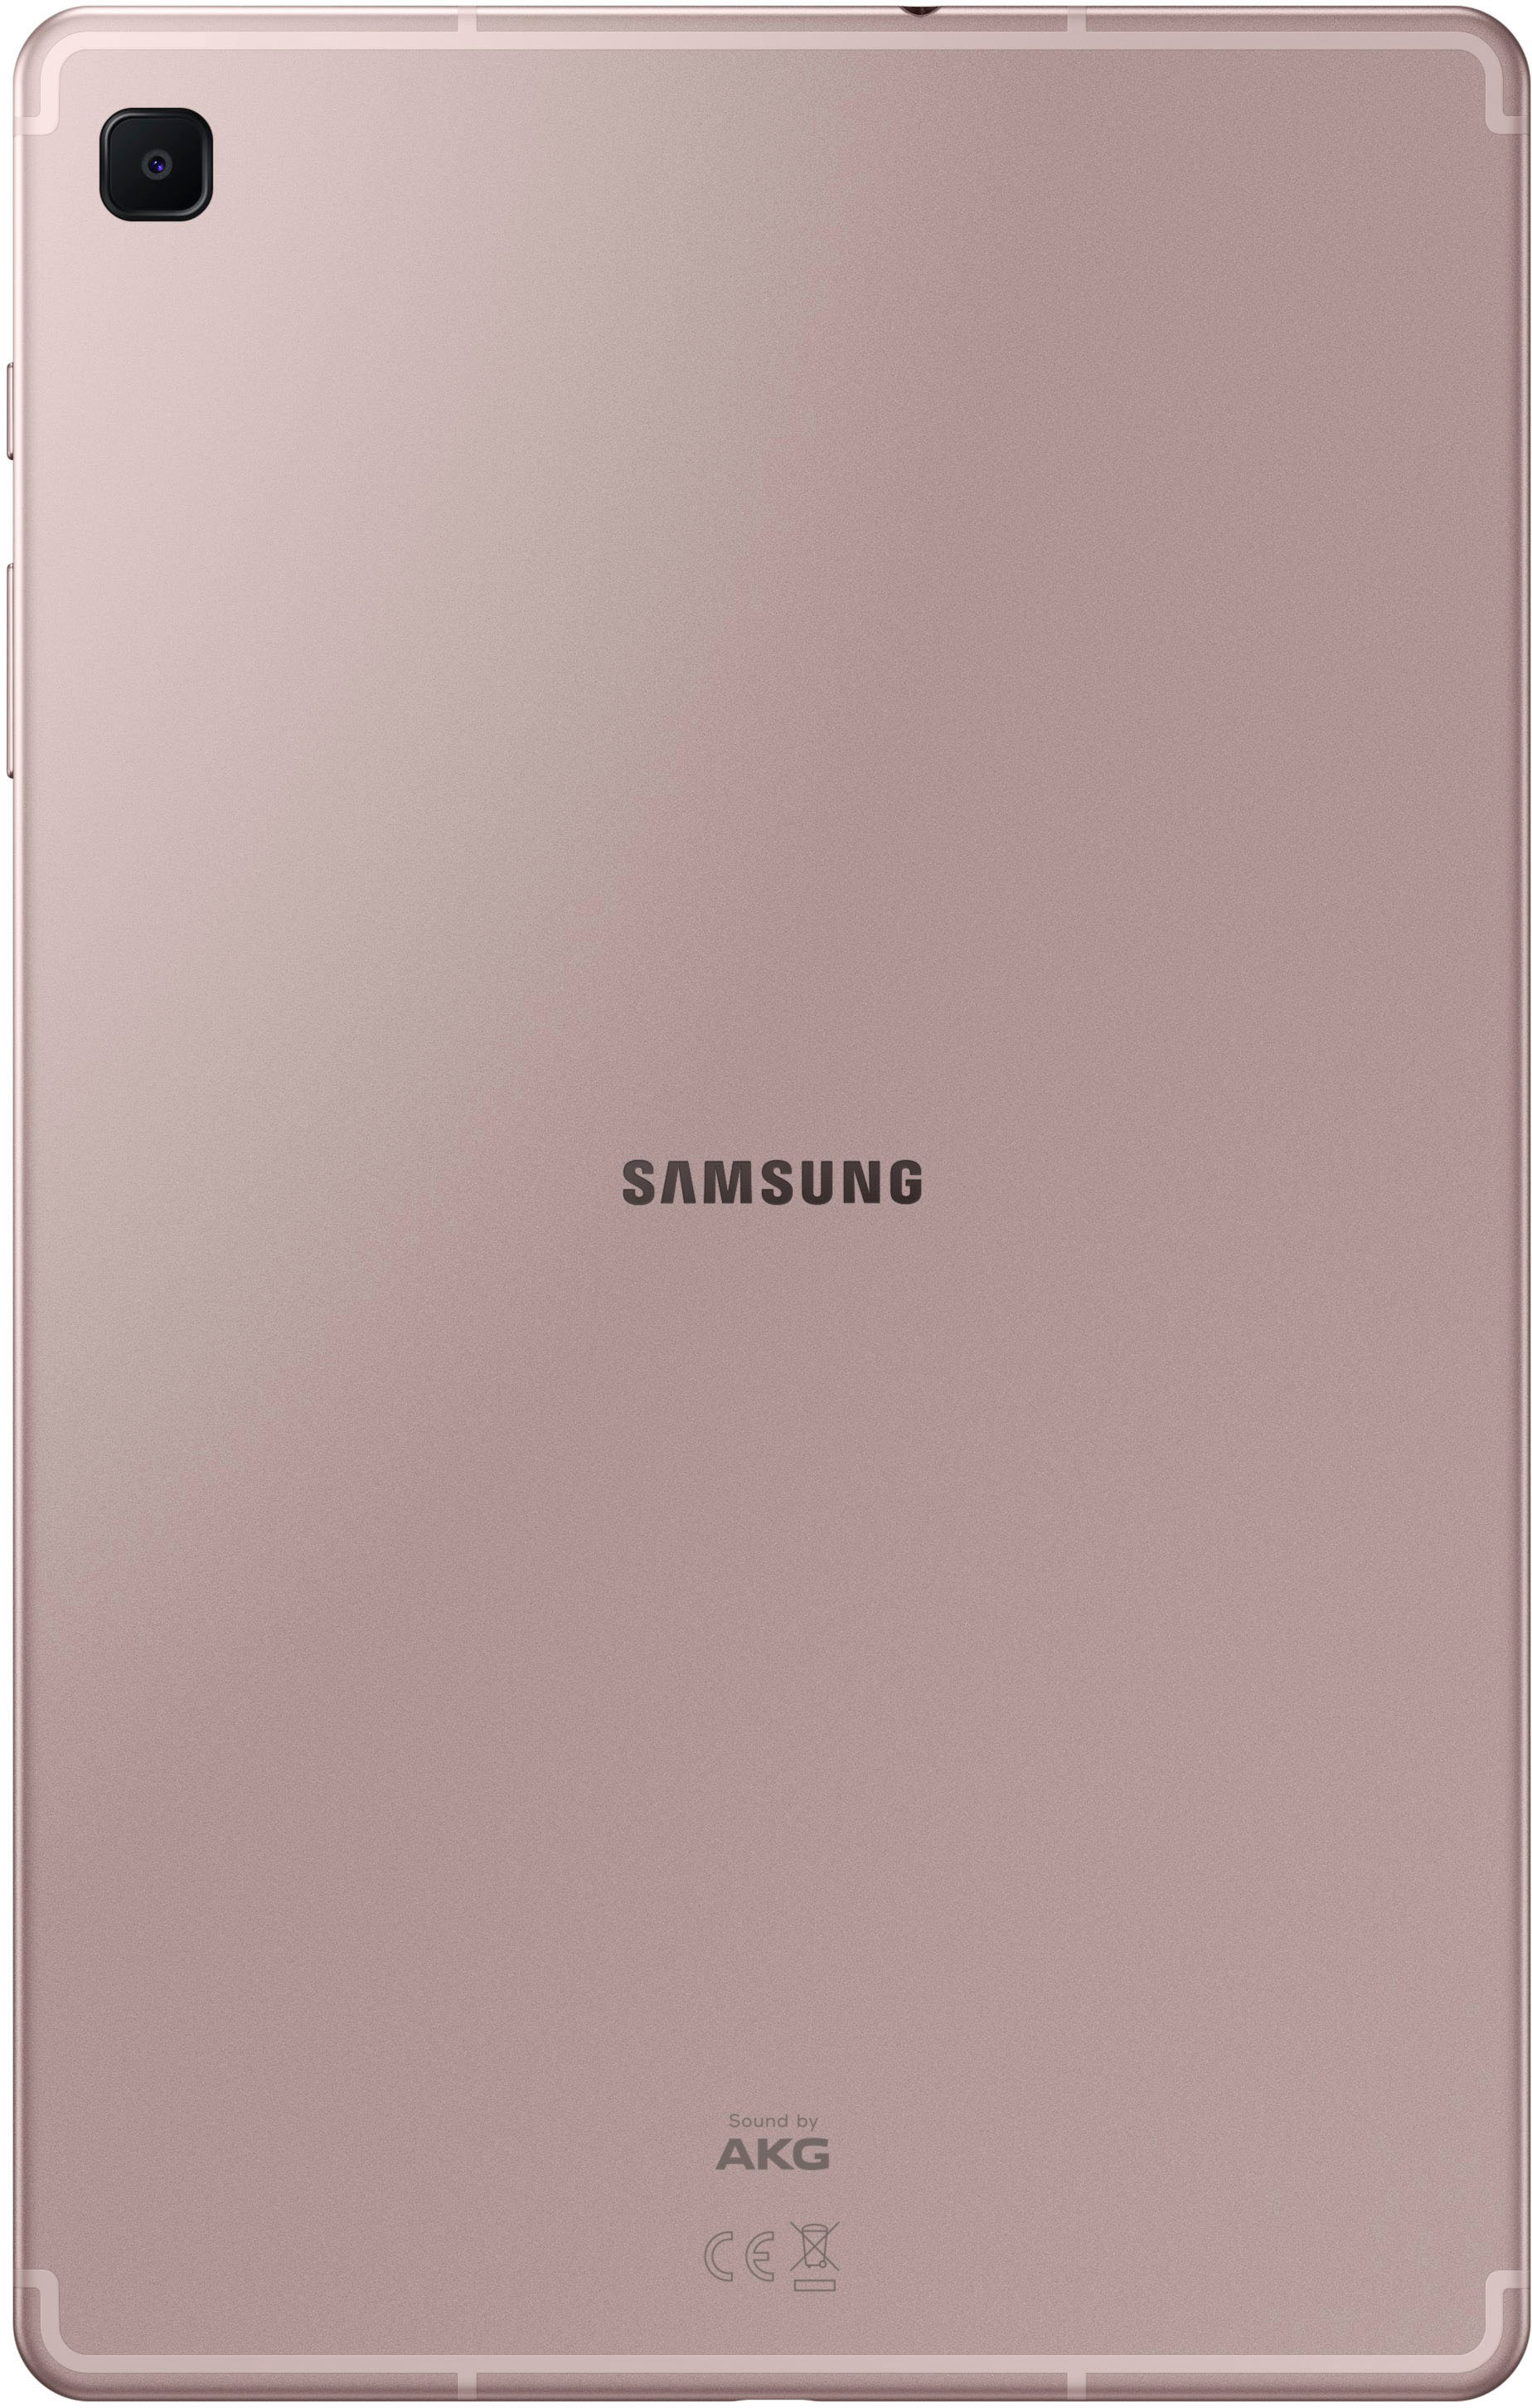 Samsung Galaxy Tab S6 Lite 64GB, Wi-Fi, 10.4 - Chiffon Rose